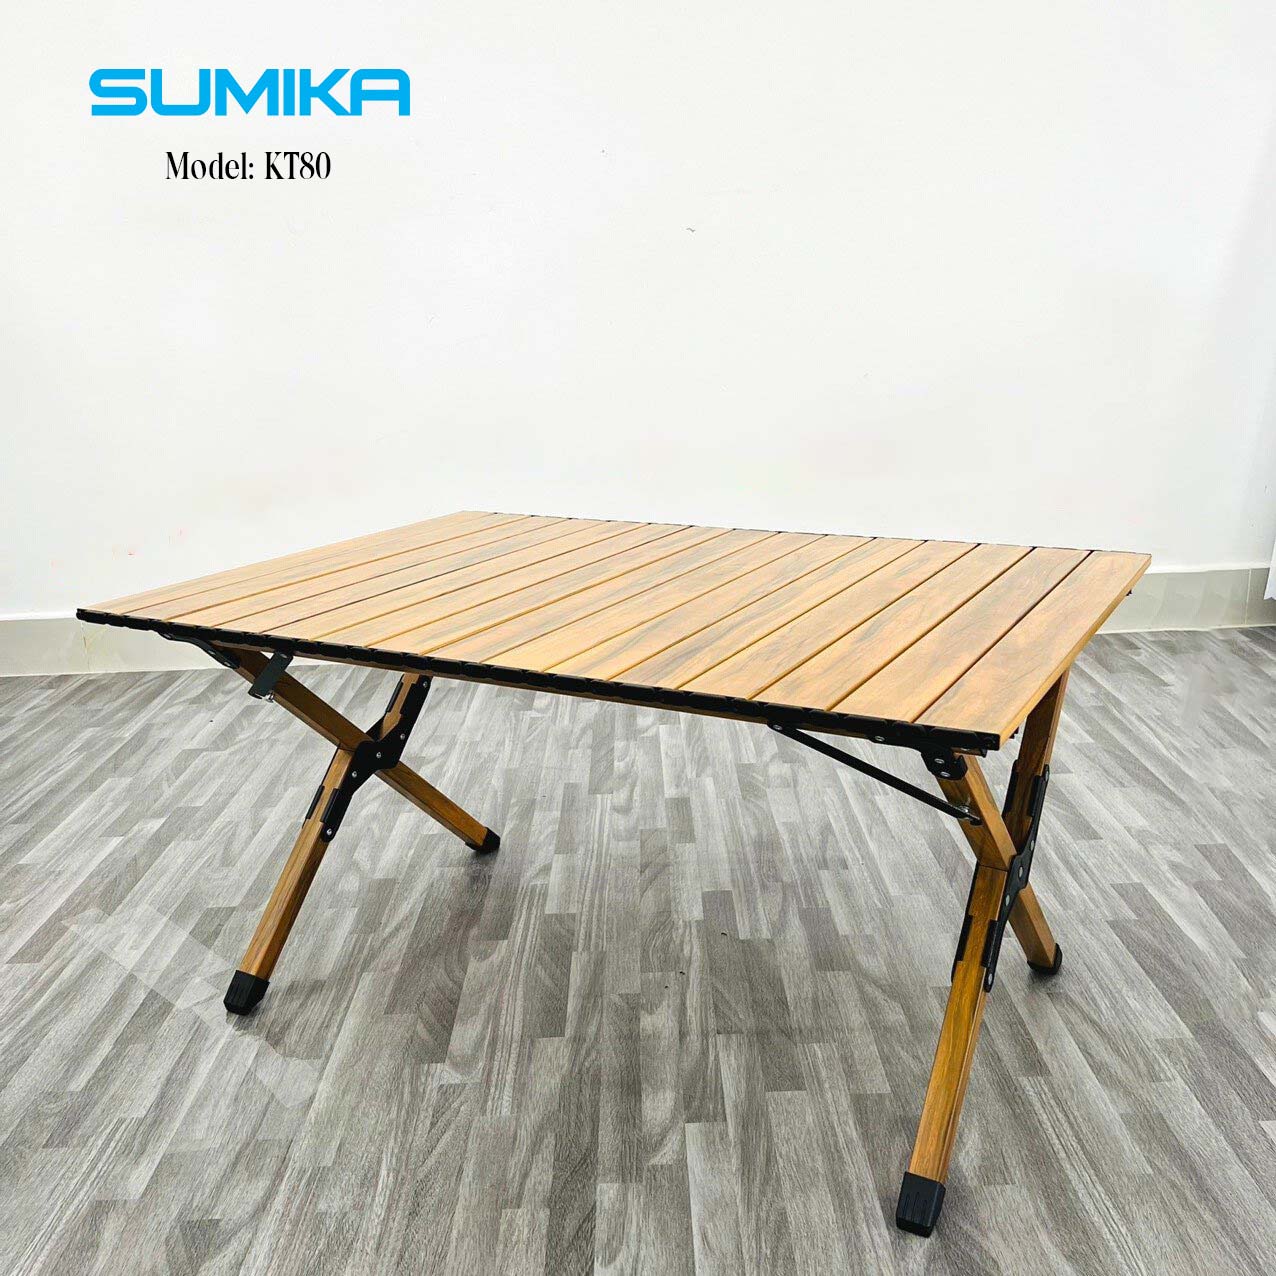 Sumika KT80 folding table